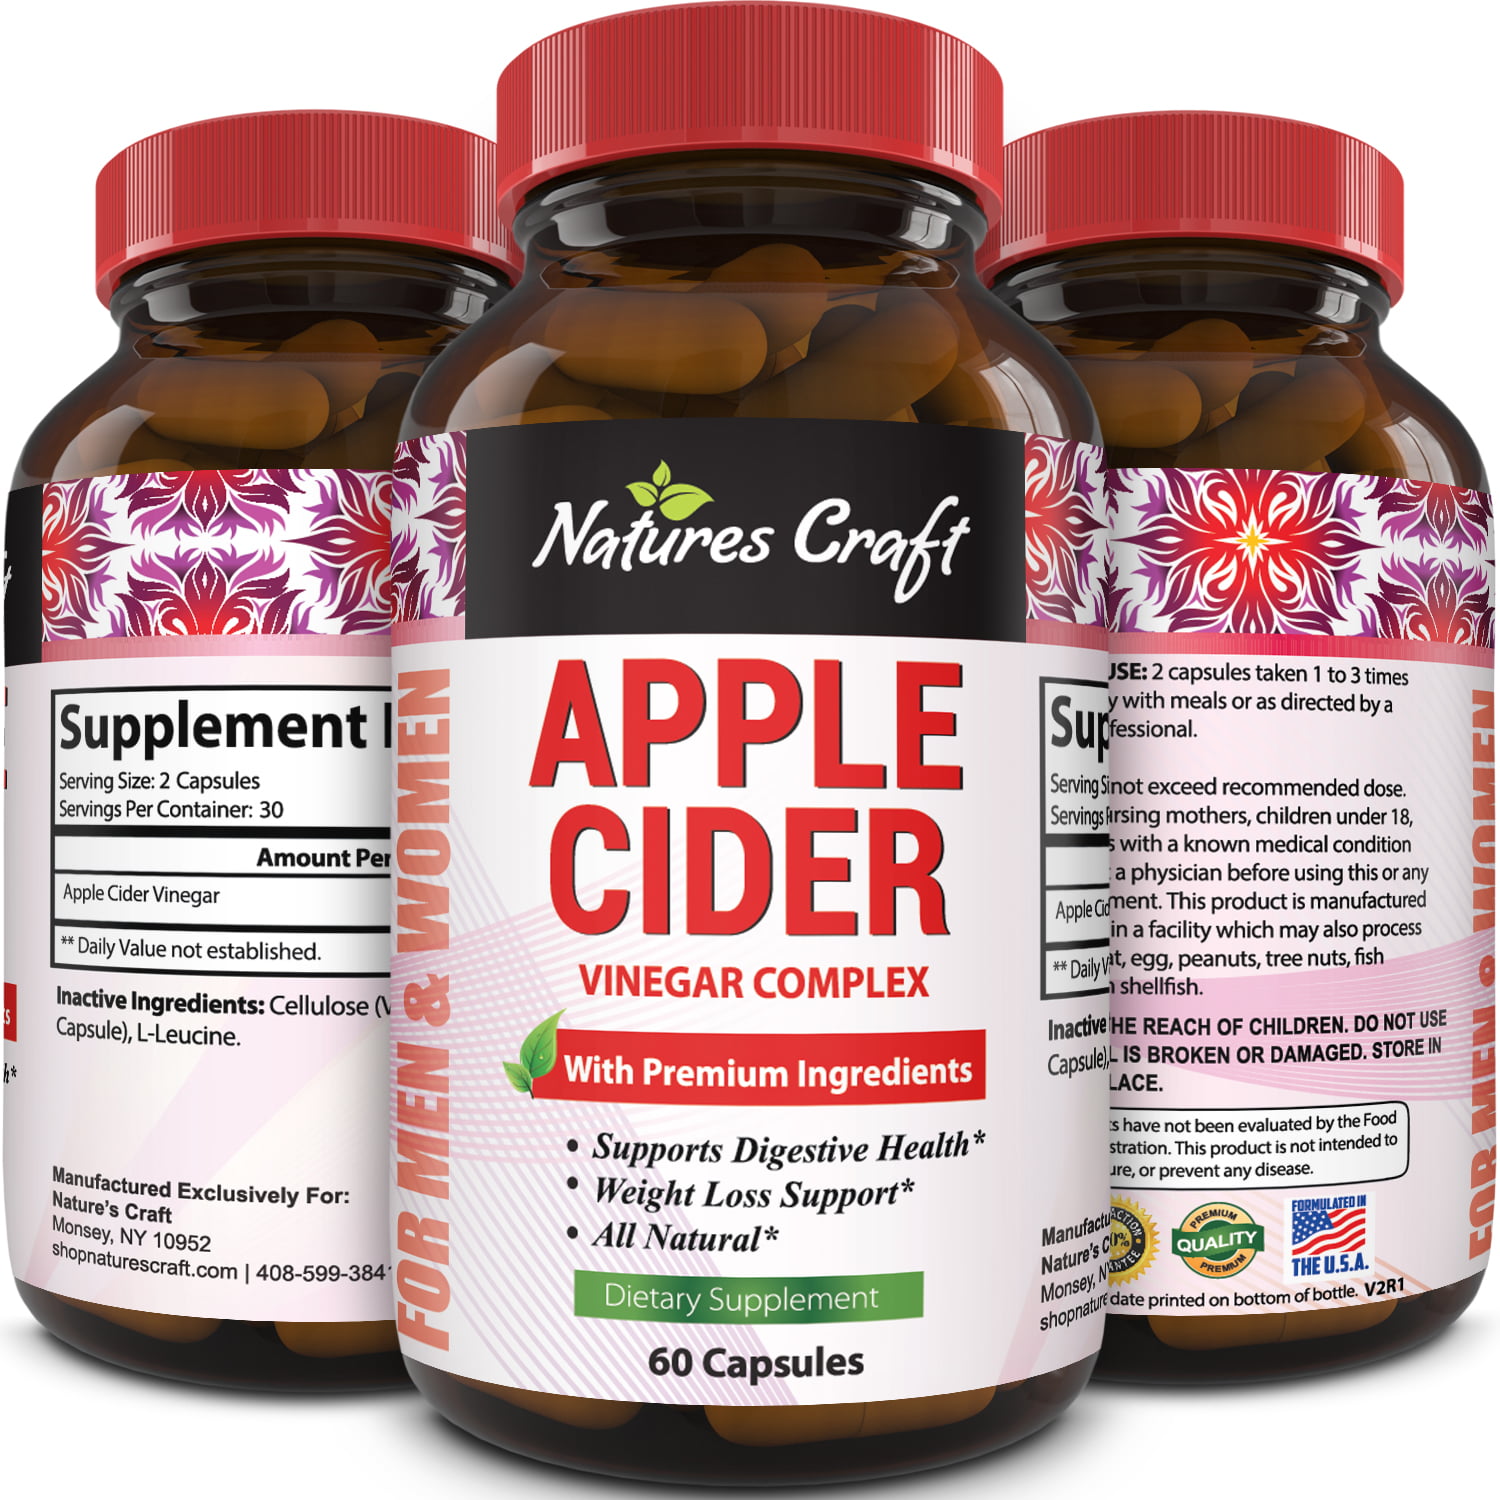 The Health Benefits of Apple Cider Vinegar